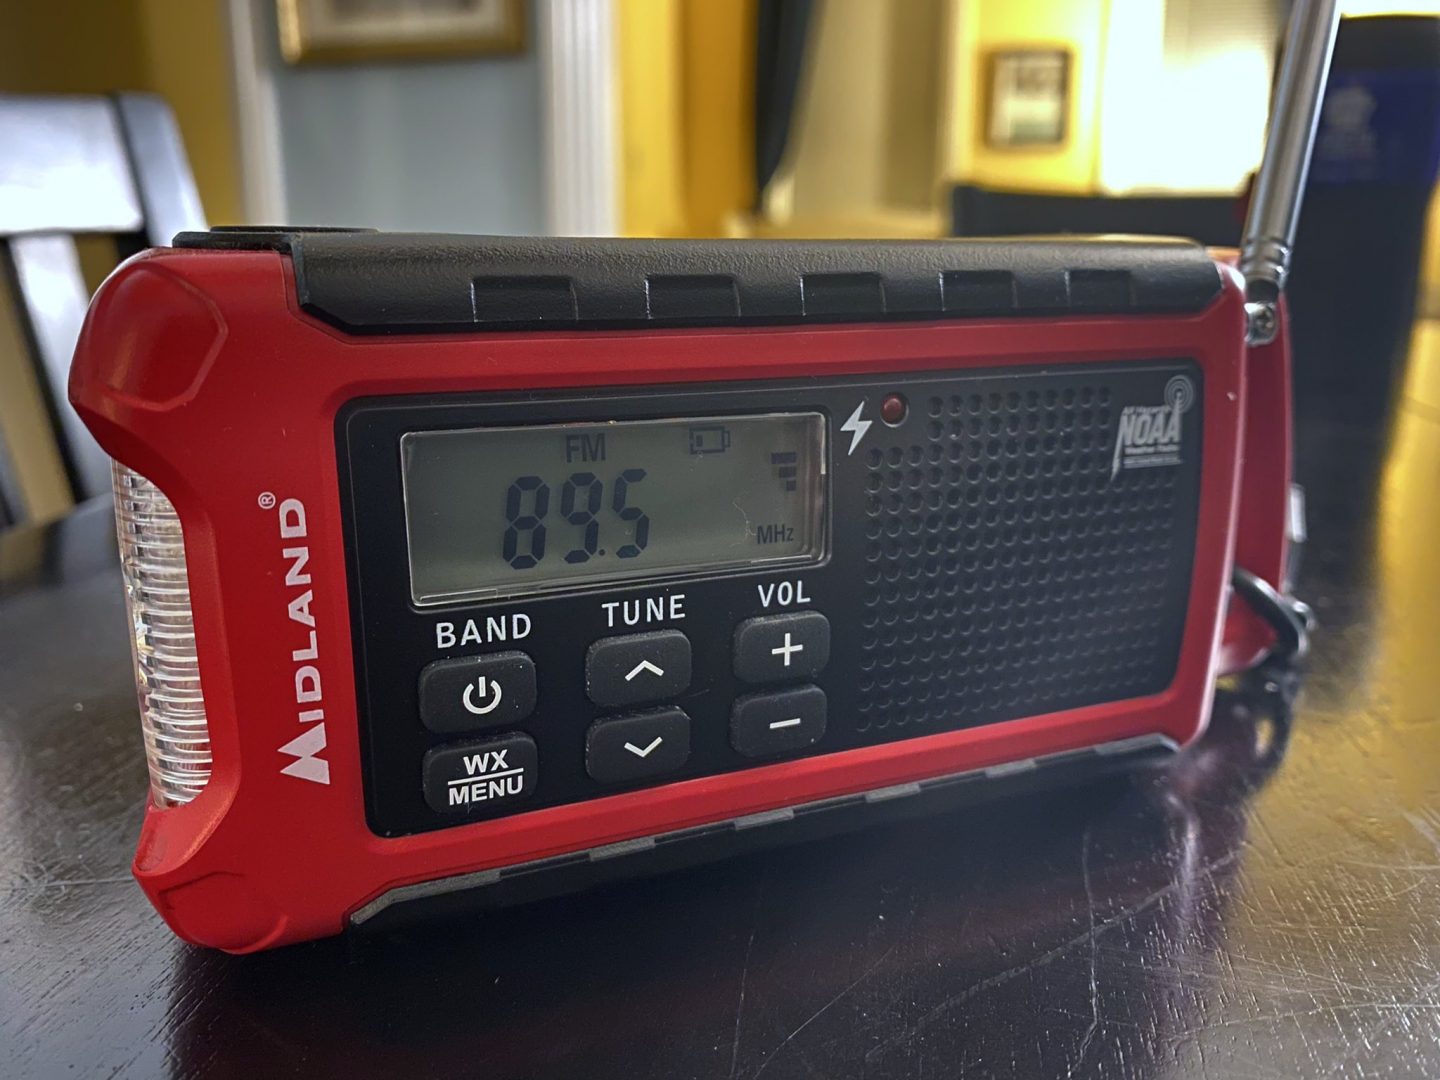 A radio tuned to 89.5